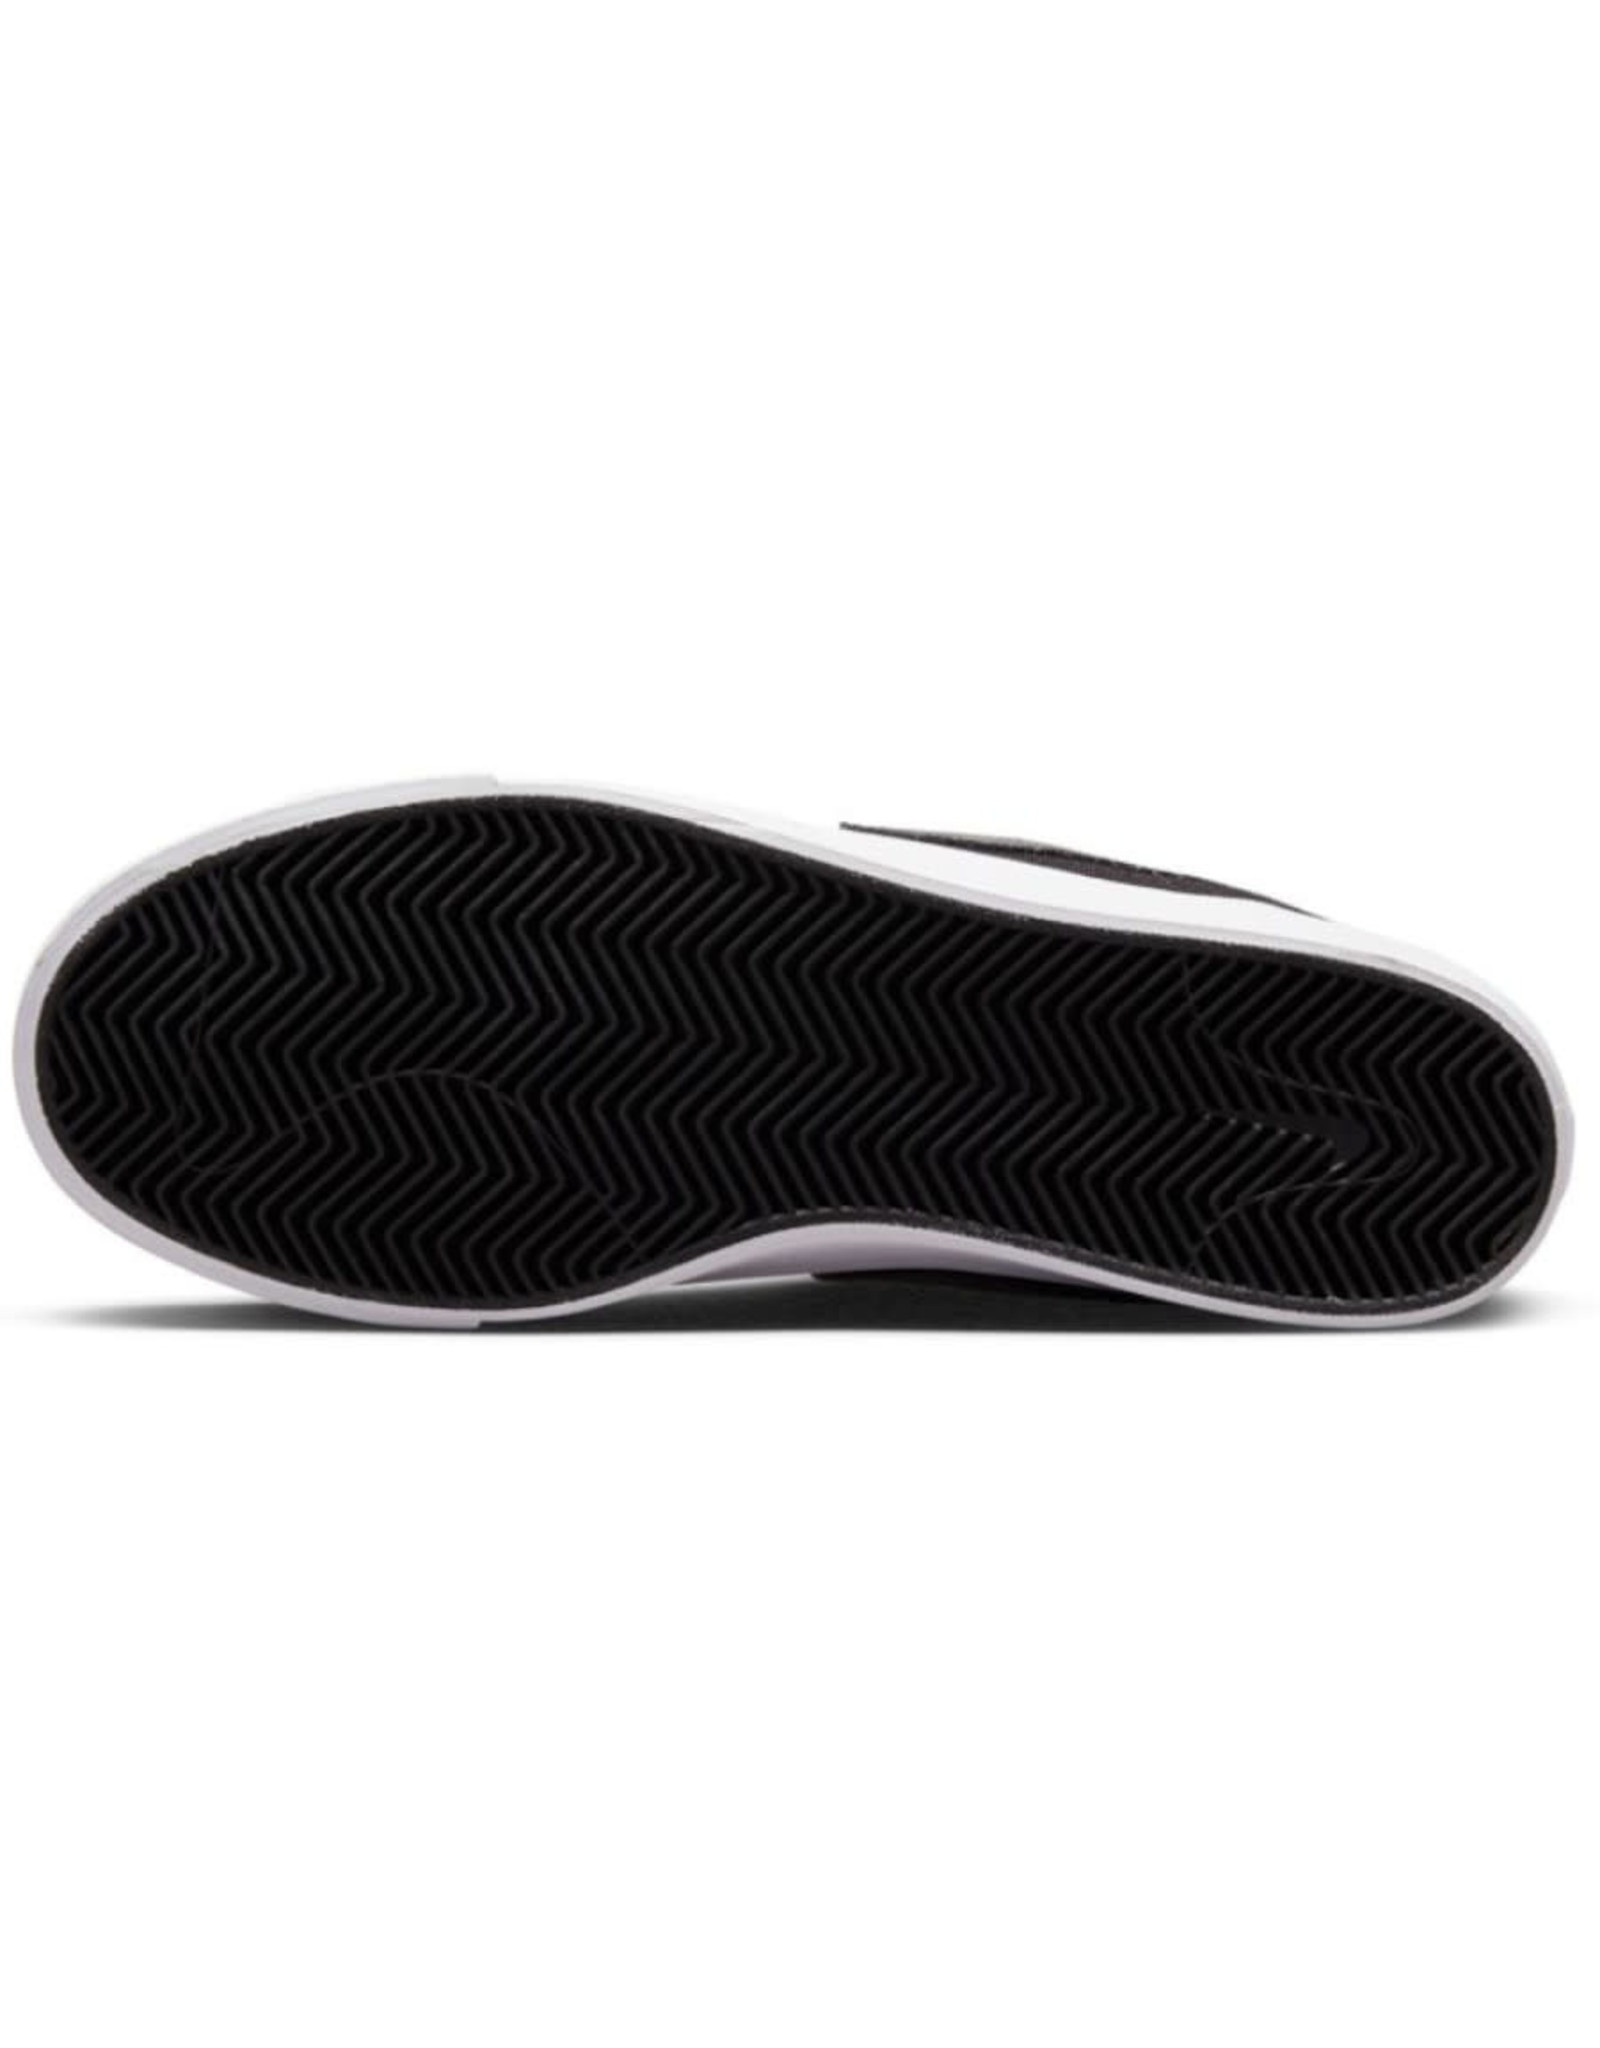 Nike SB Nike SB Shoe Blazer Court Mid Premium (Black/Anthracite)